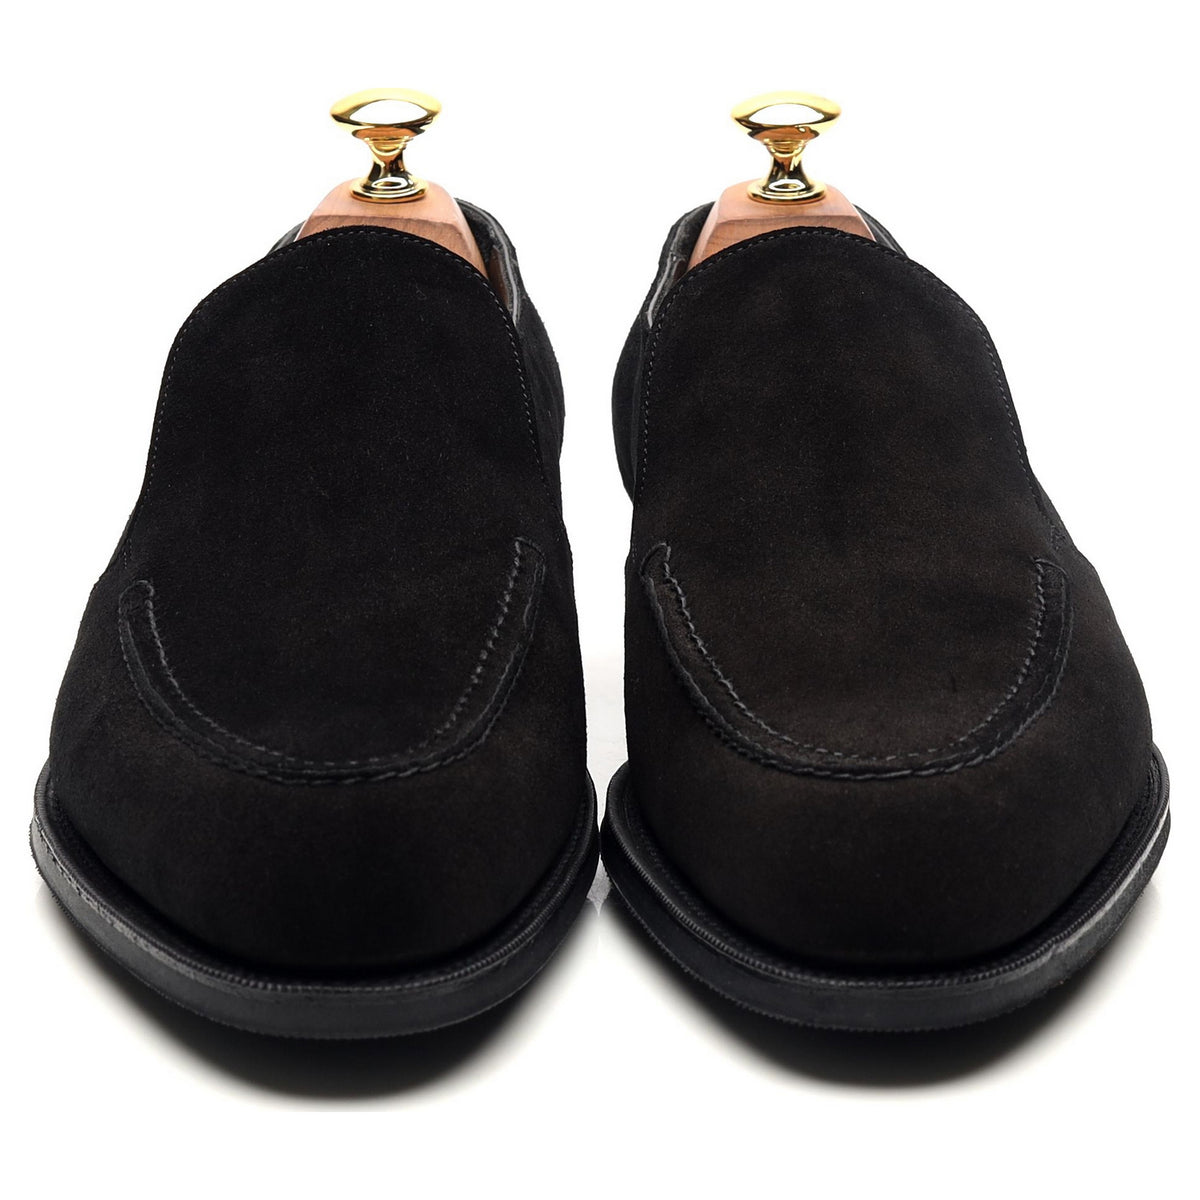 Black Suede Slip On Loafers UK 6.5 E